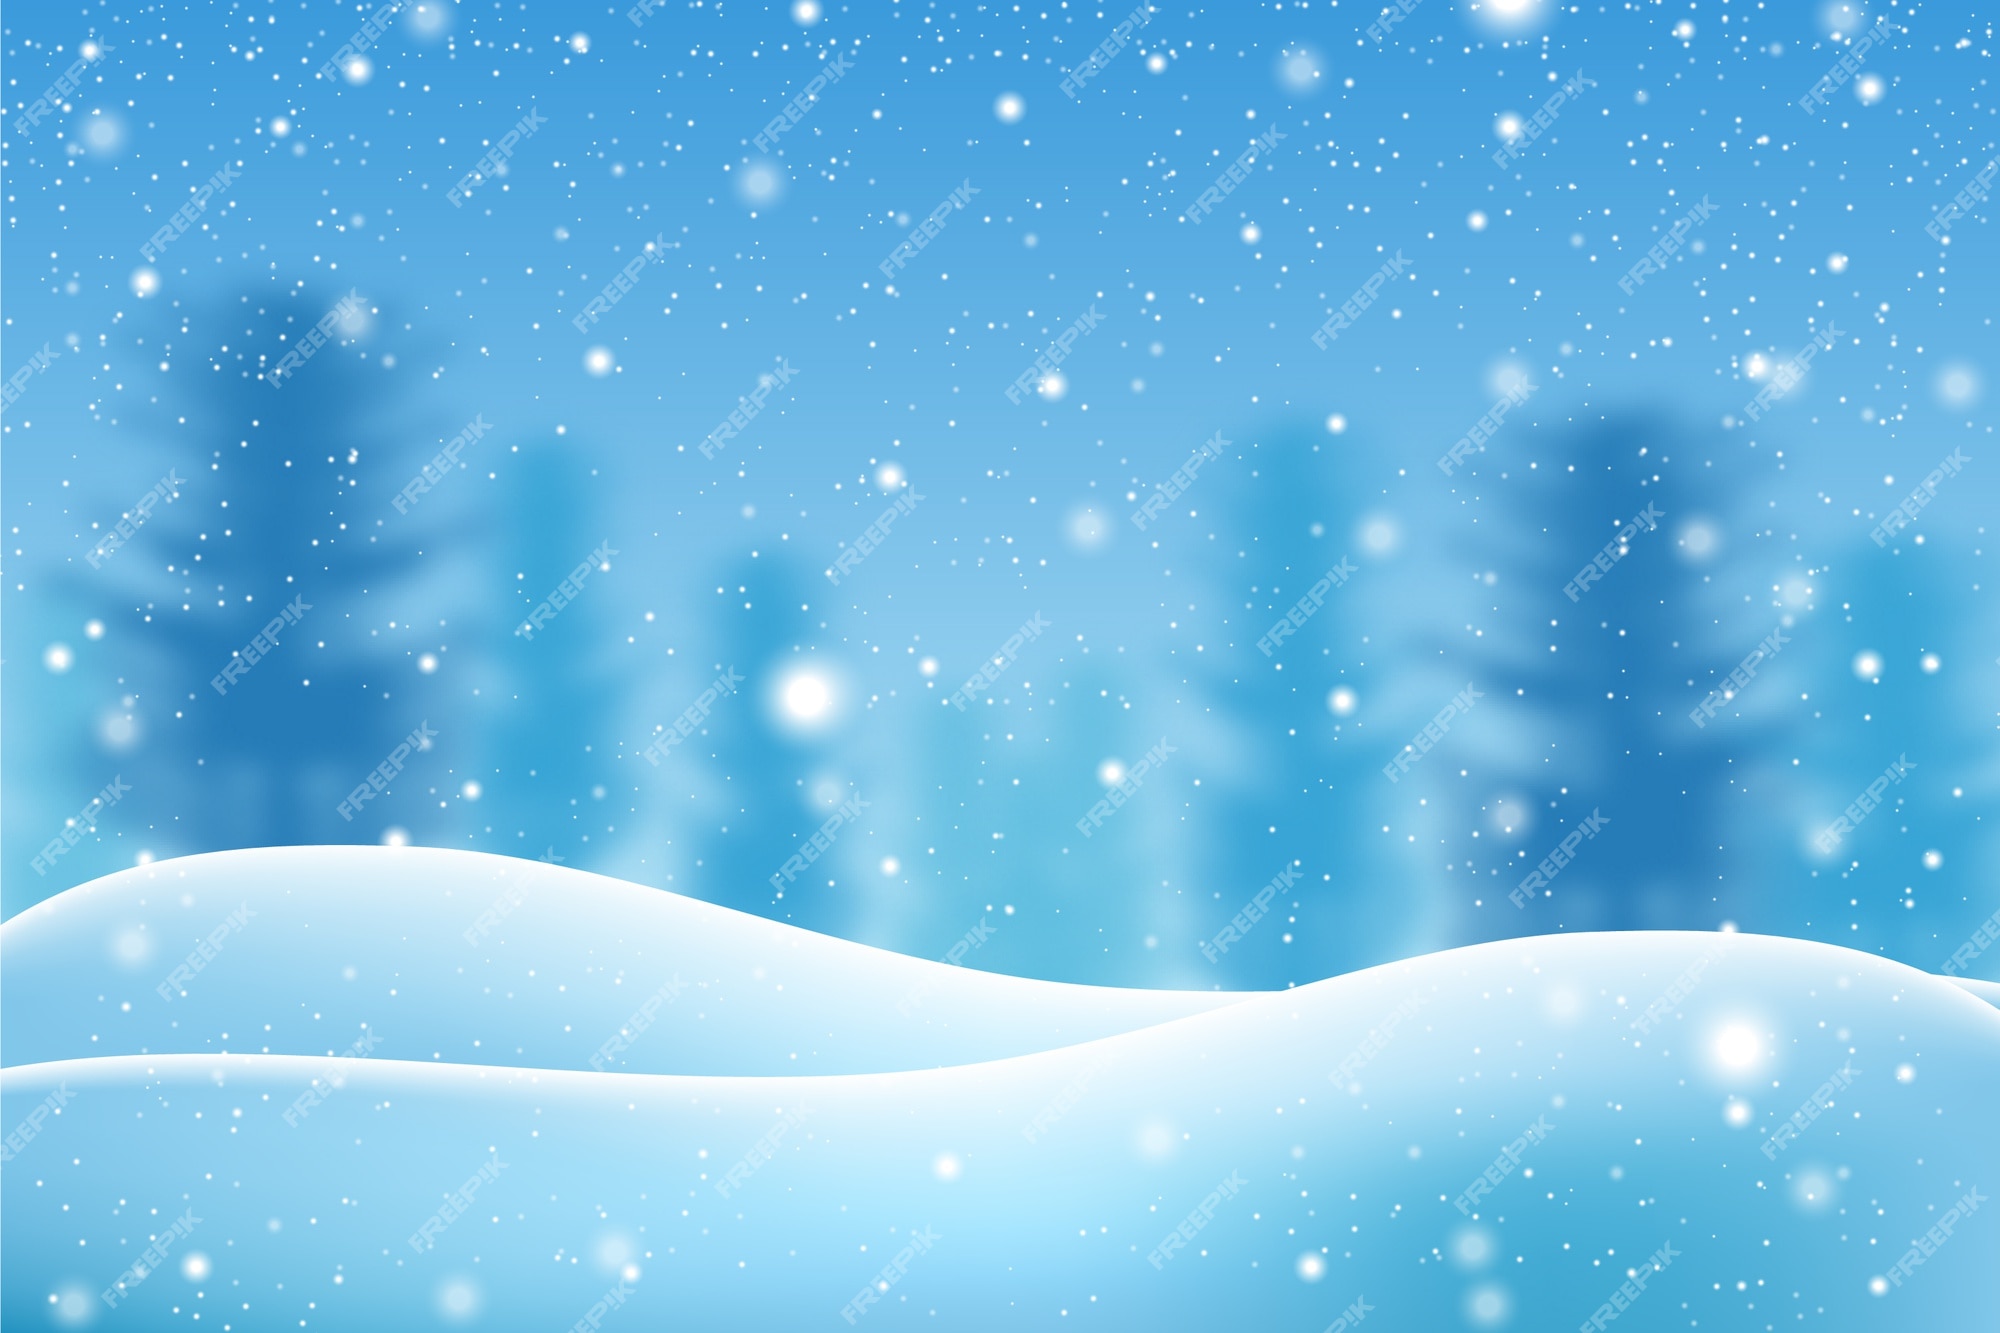 Snow Winter Background Images - Free Download on Freepik